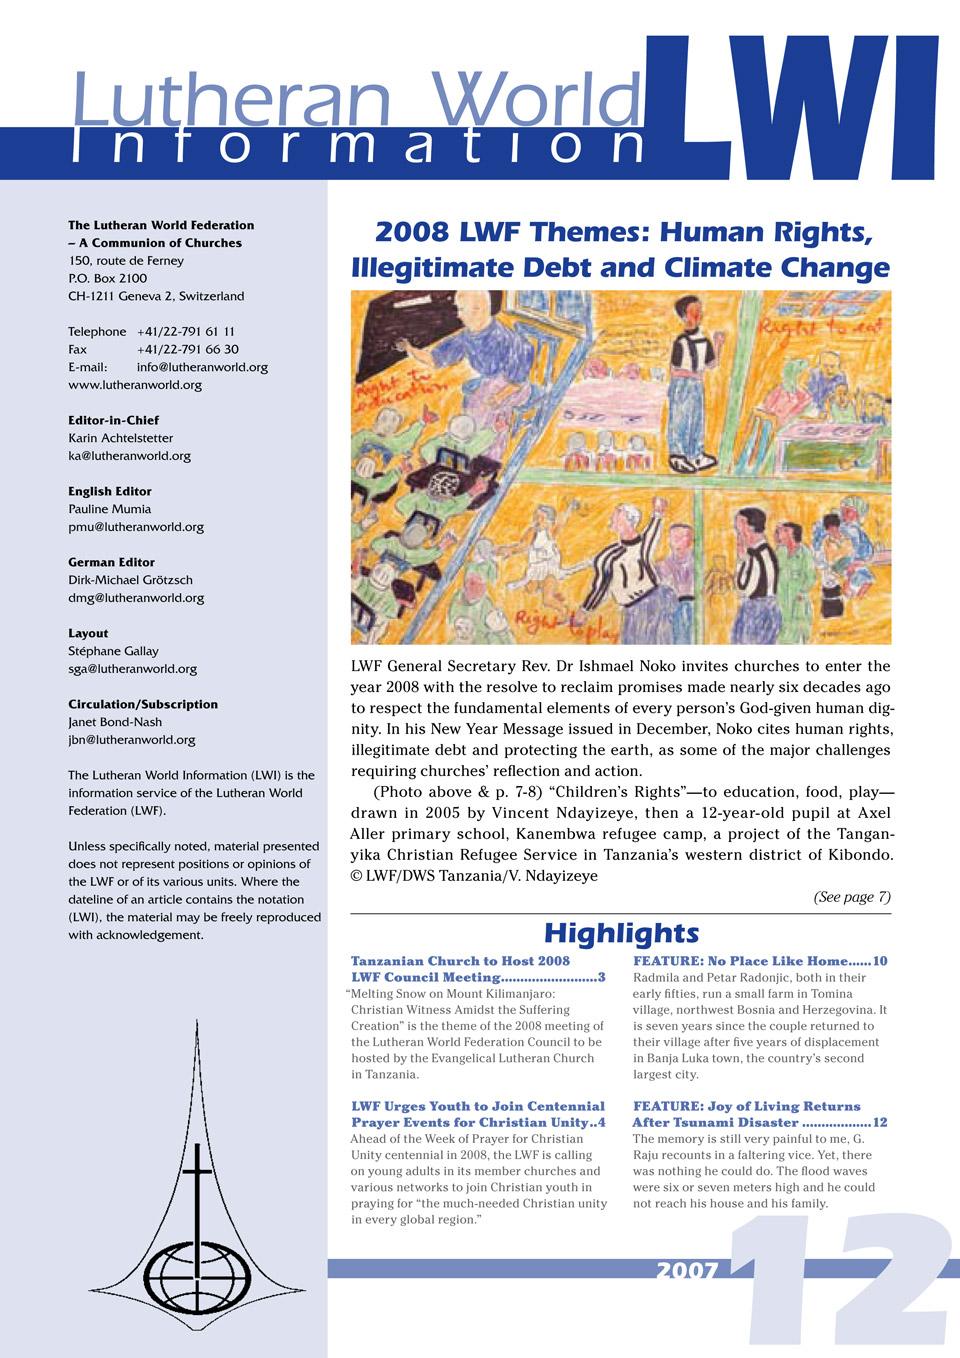 Lutheran World Information PDF edition - 2007